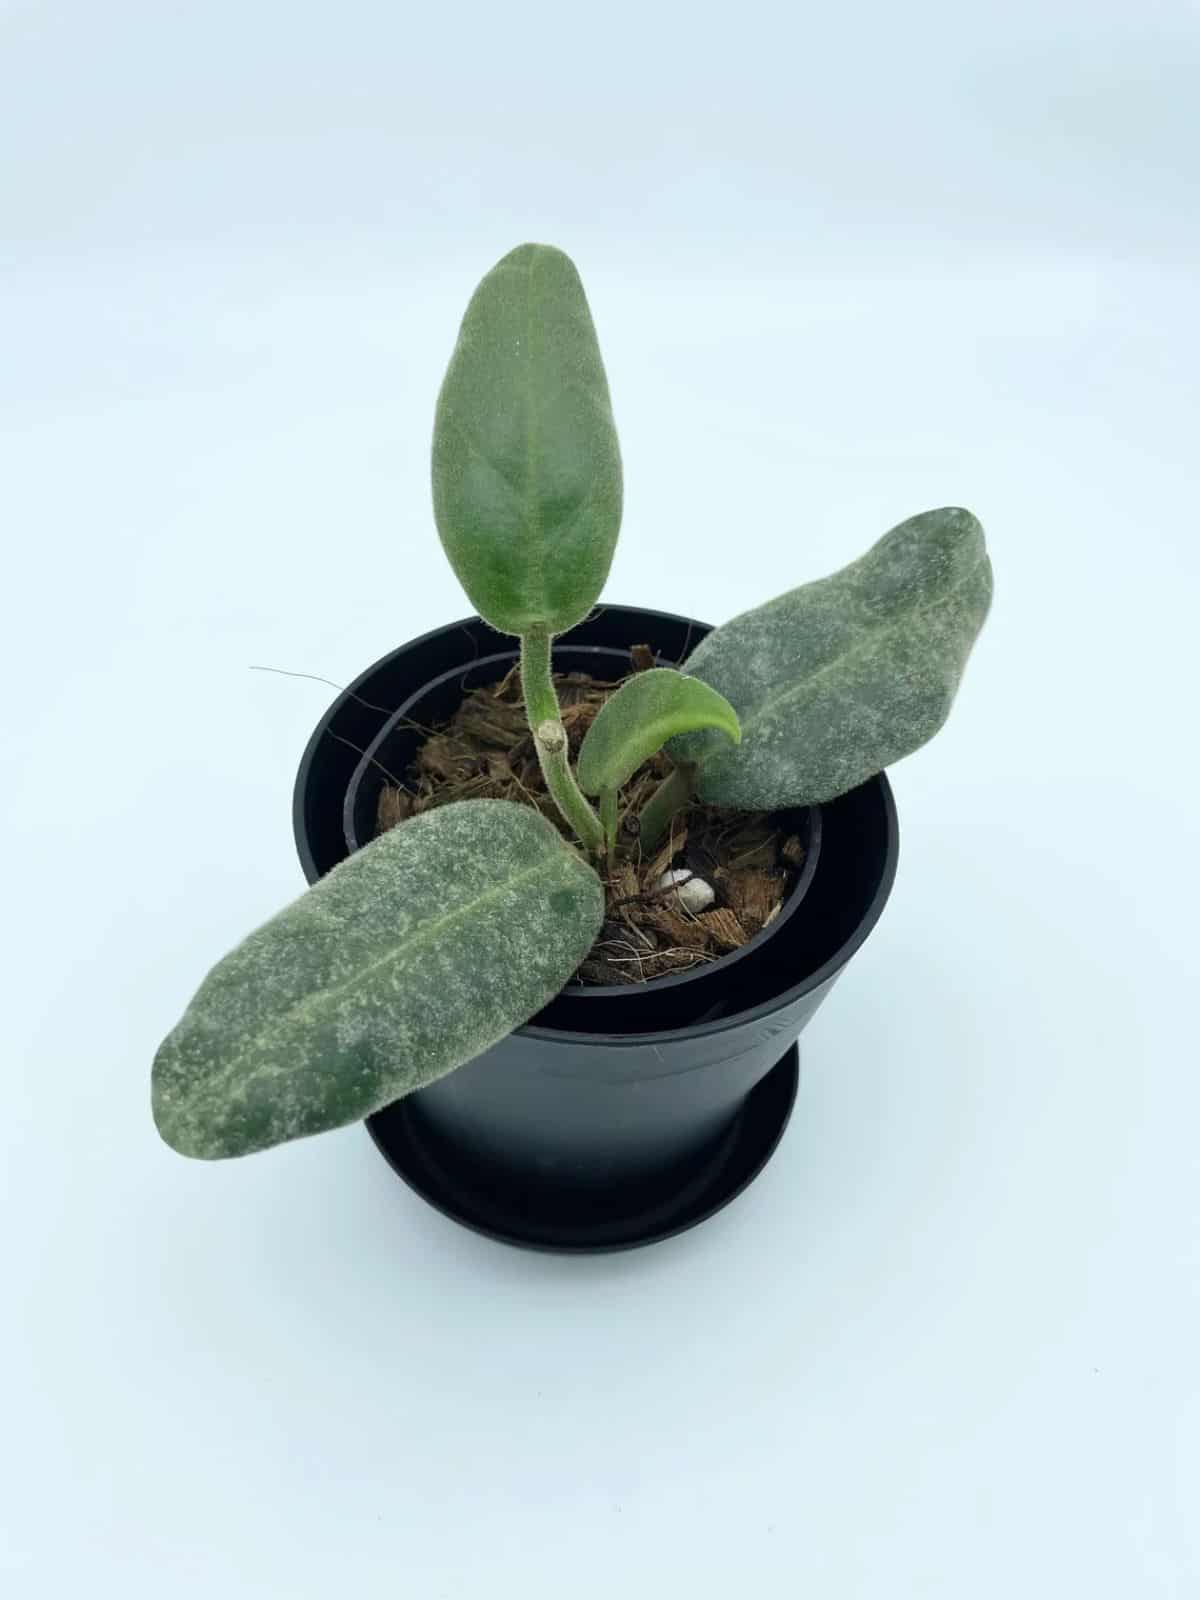 Hoya Calycina grows in a plastic pot.